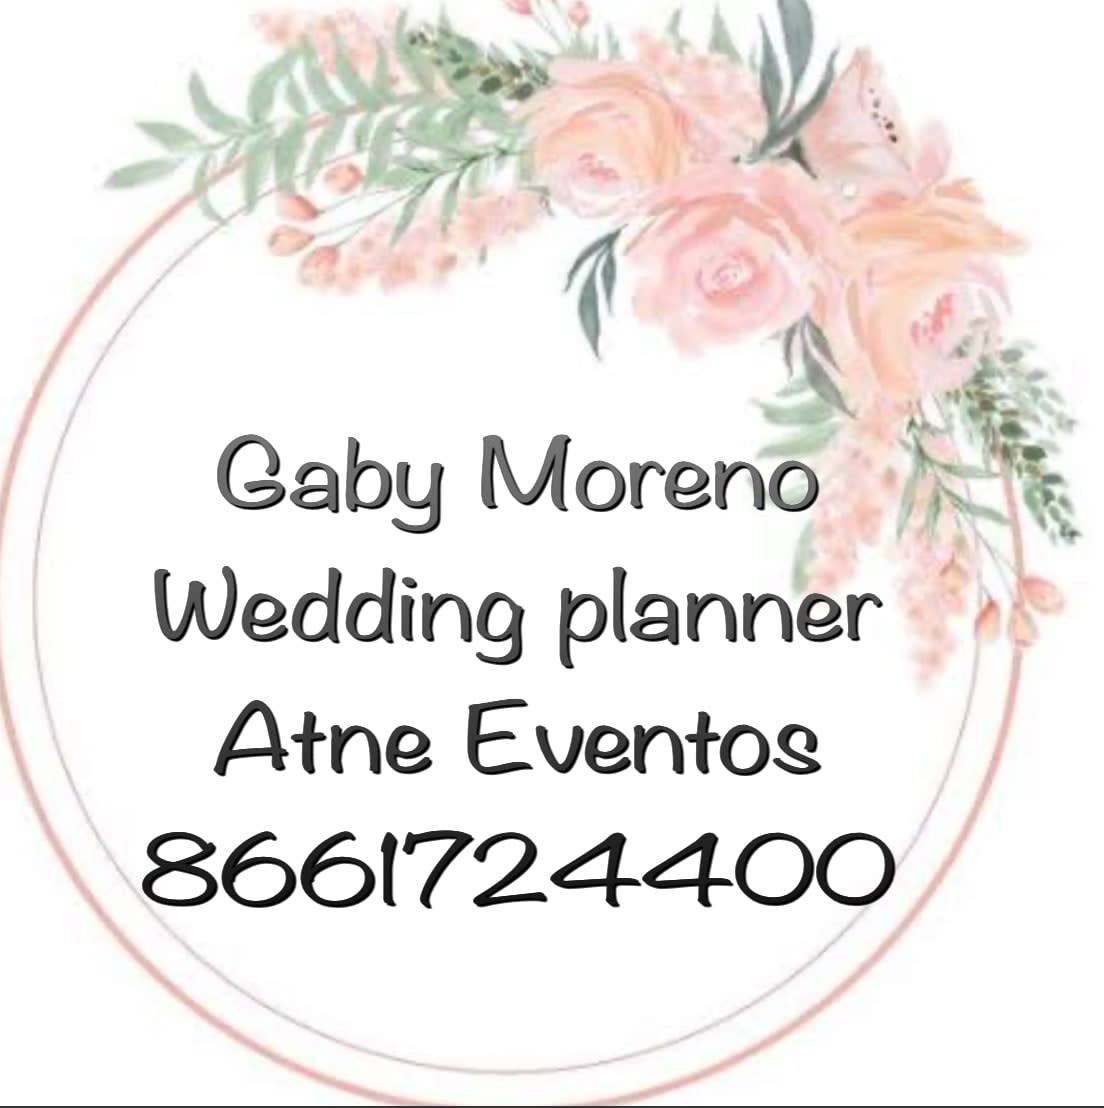 Gaby Moreno Wedding Planner